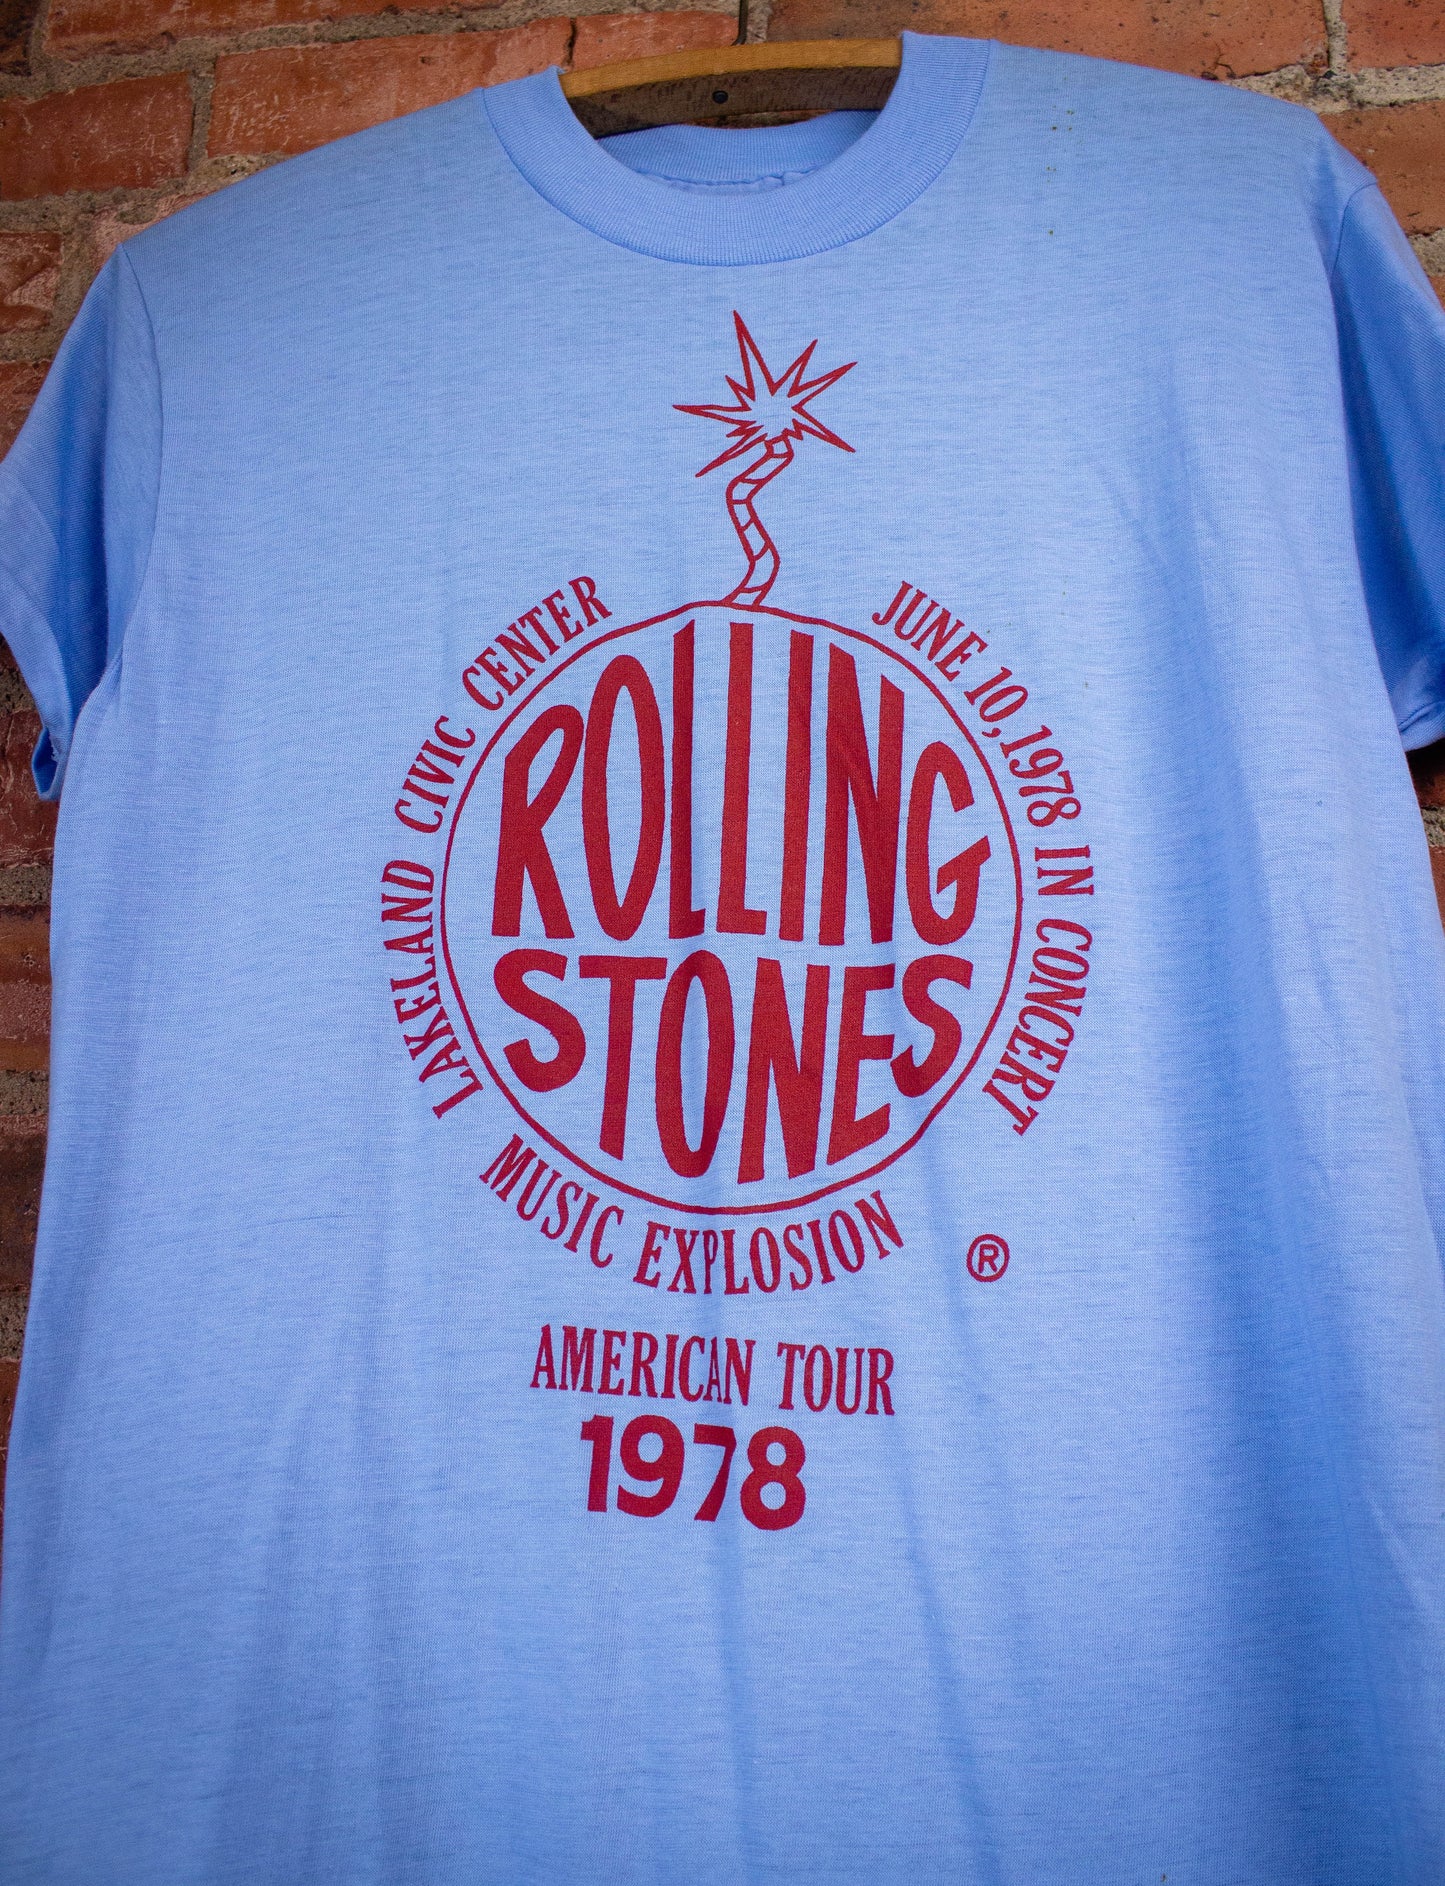 Vintage Rolling Stones Music Explosion Concert T Shirt 1978 Blue Small/Medium